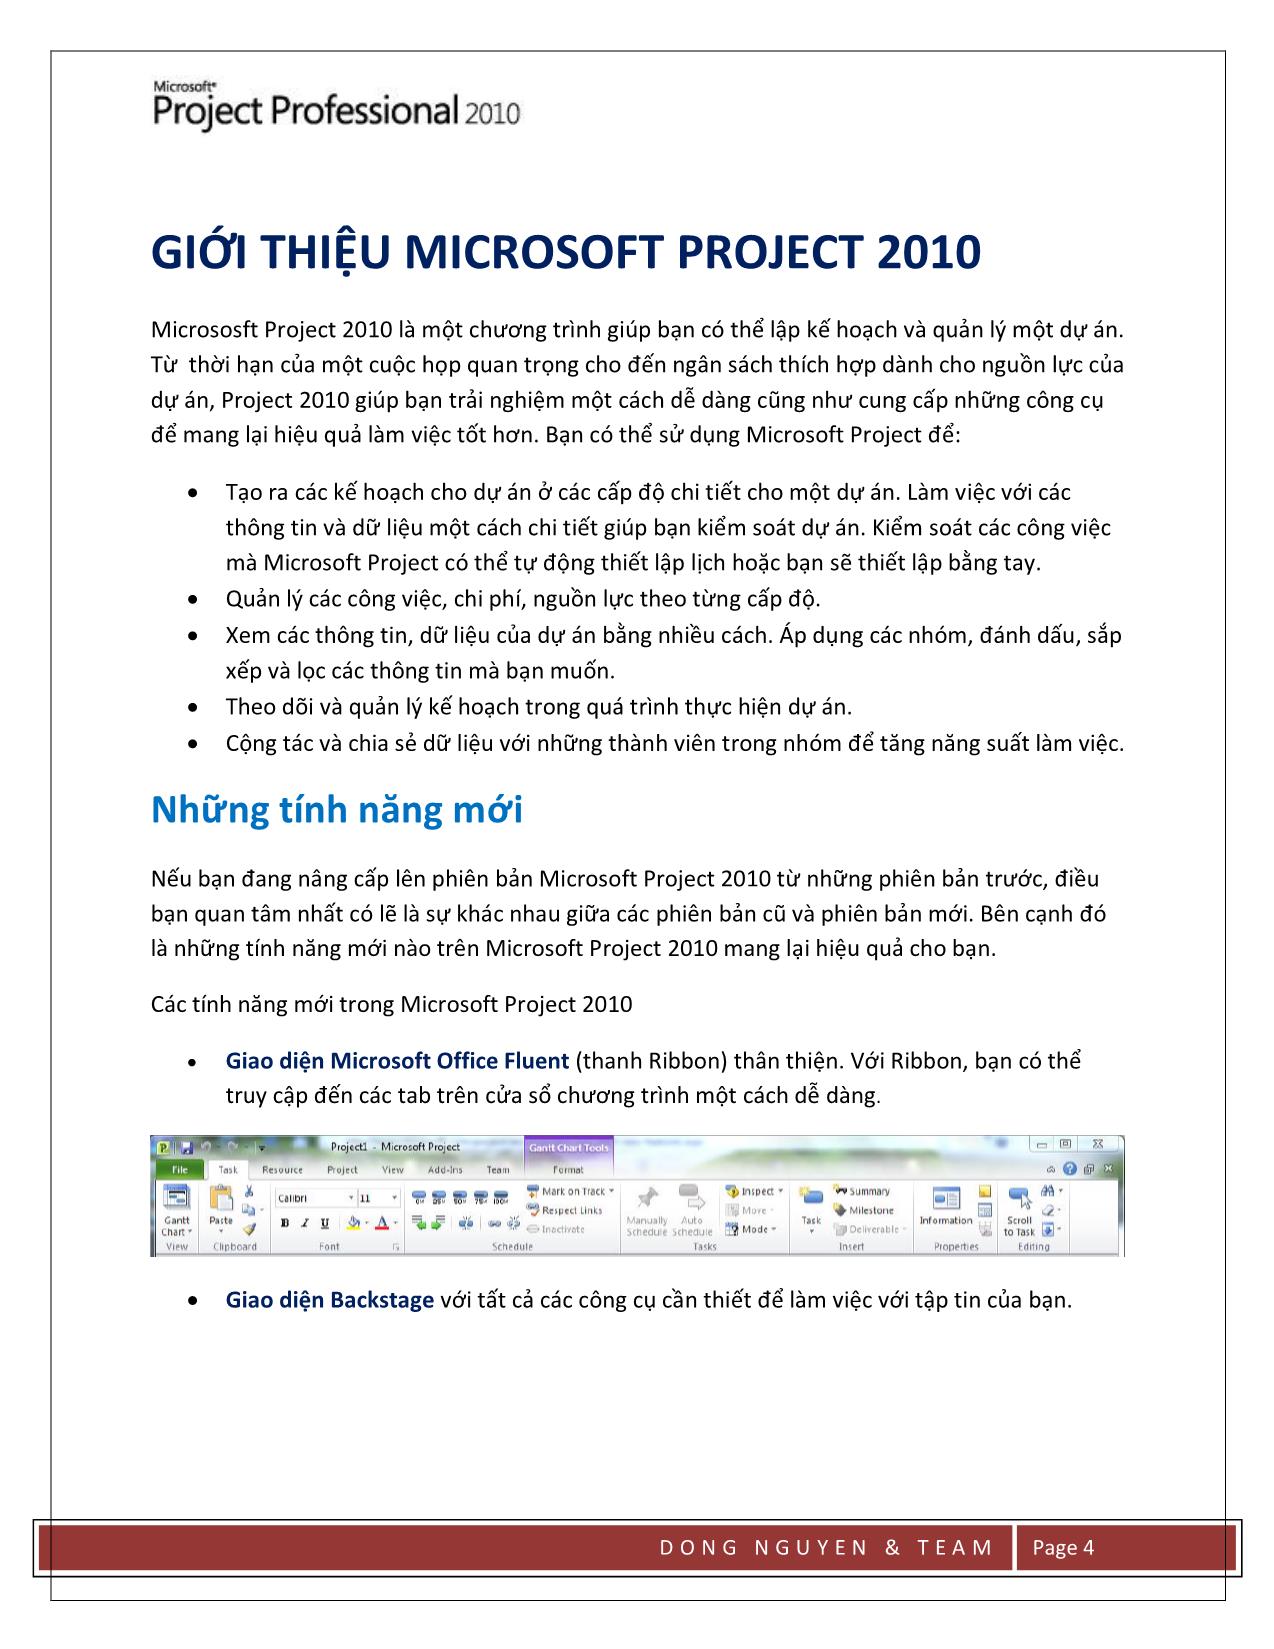 Microsoft Project 2010 trang 4